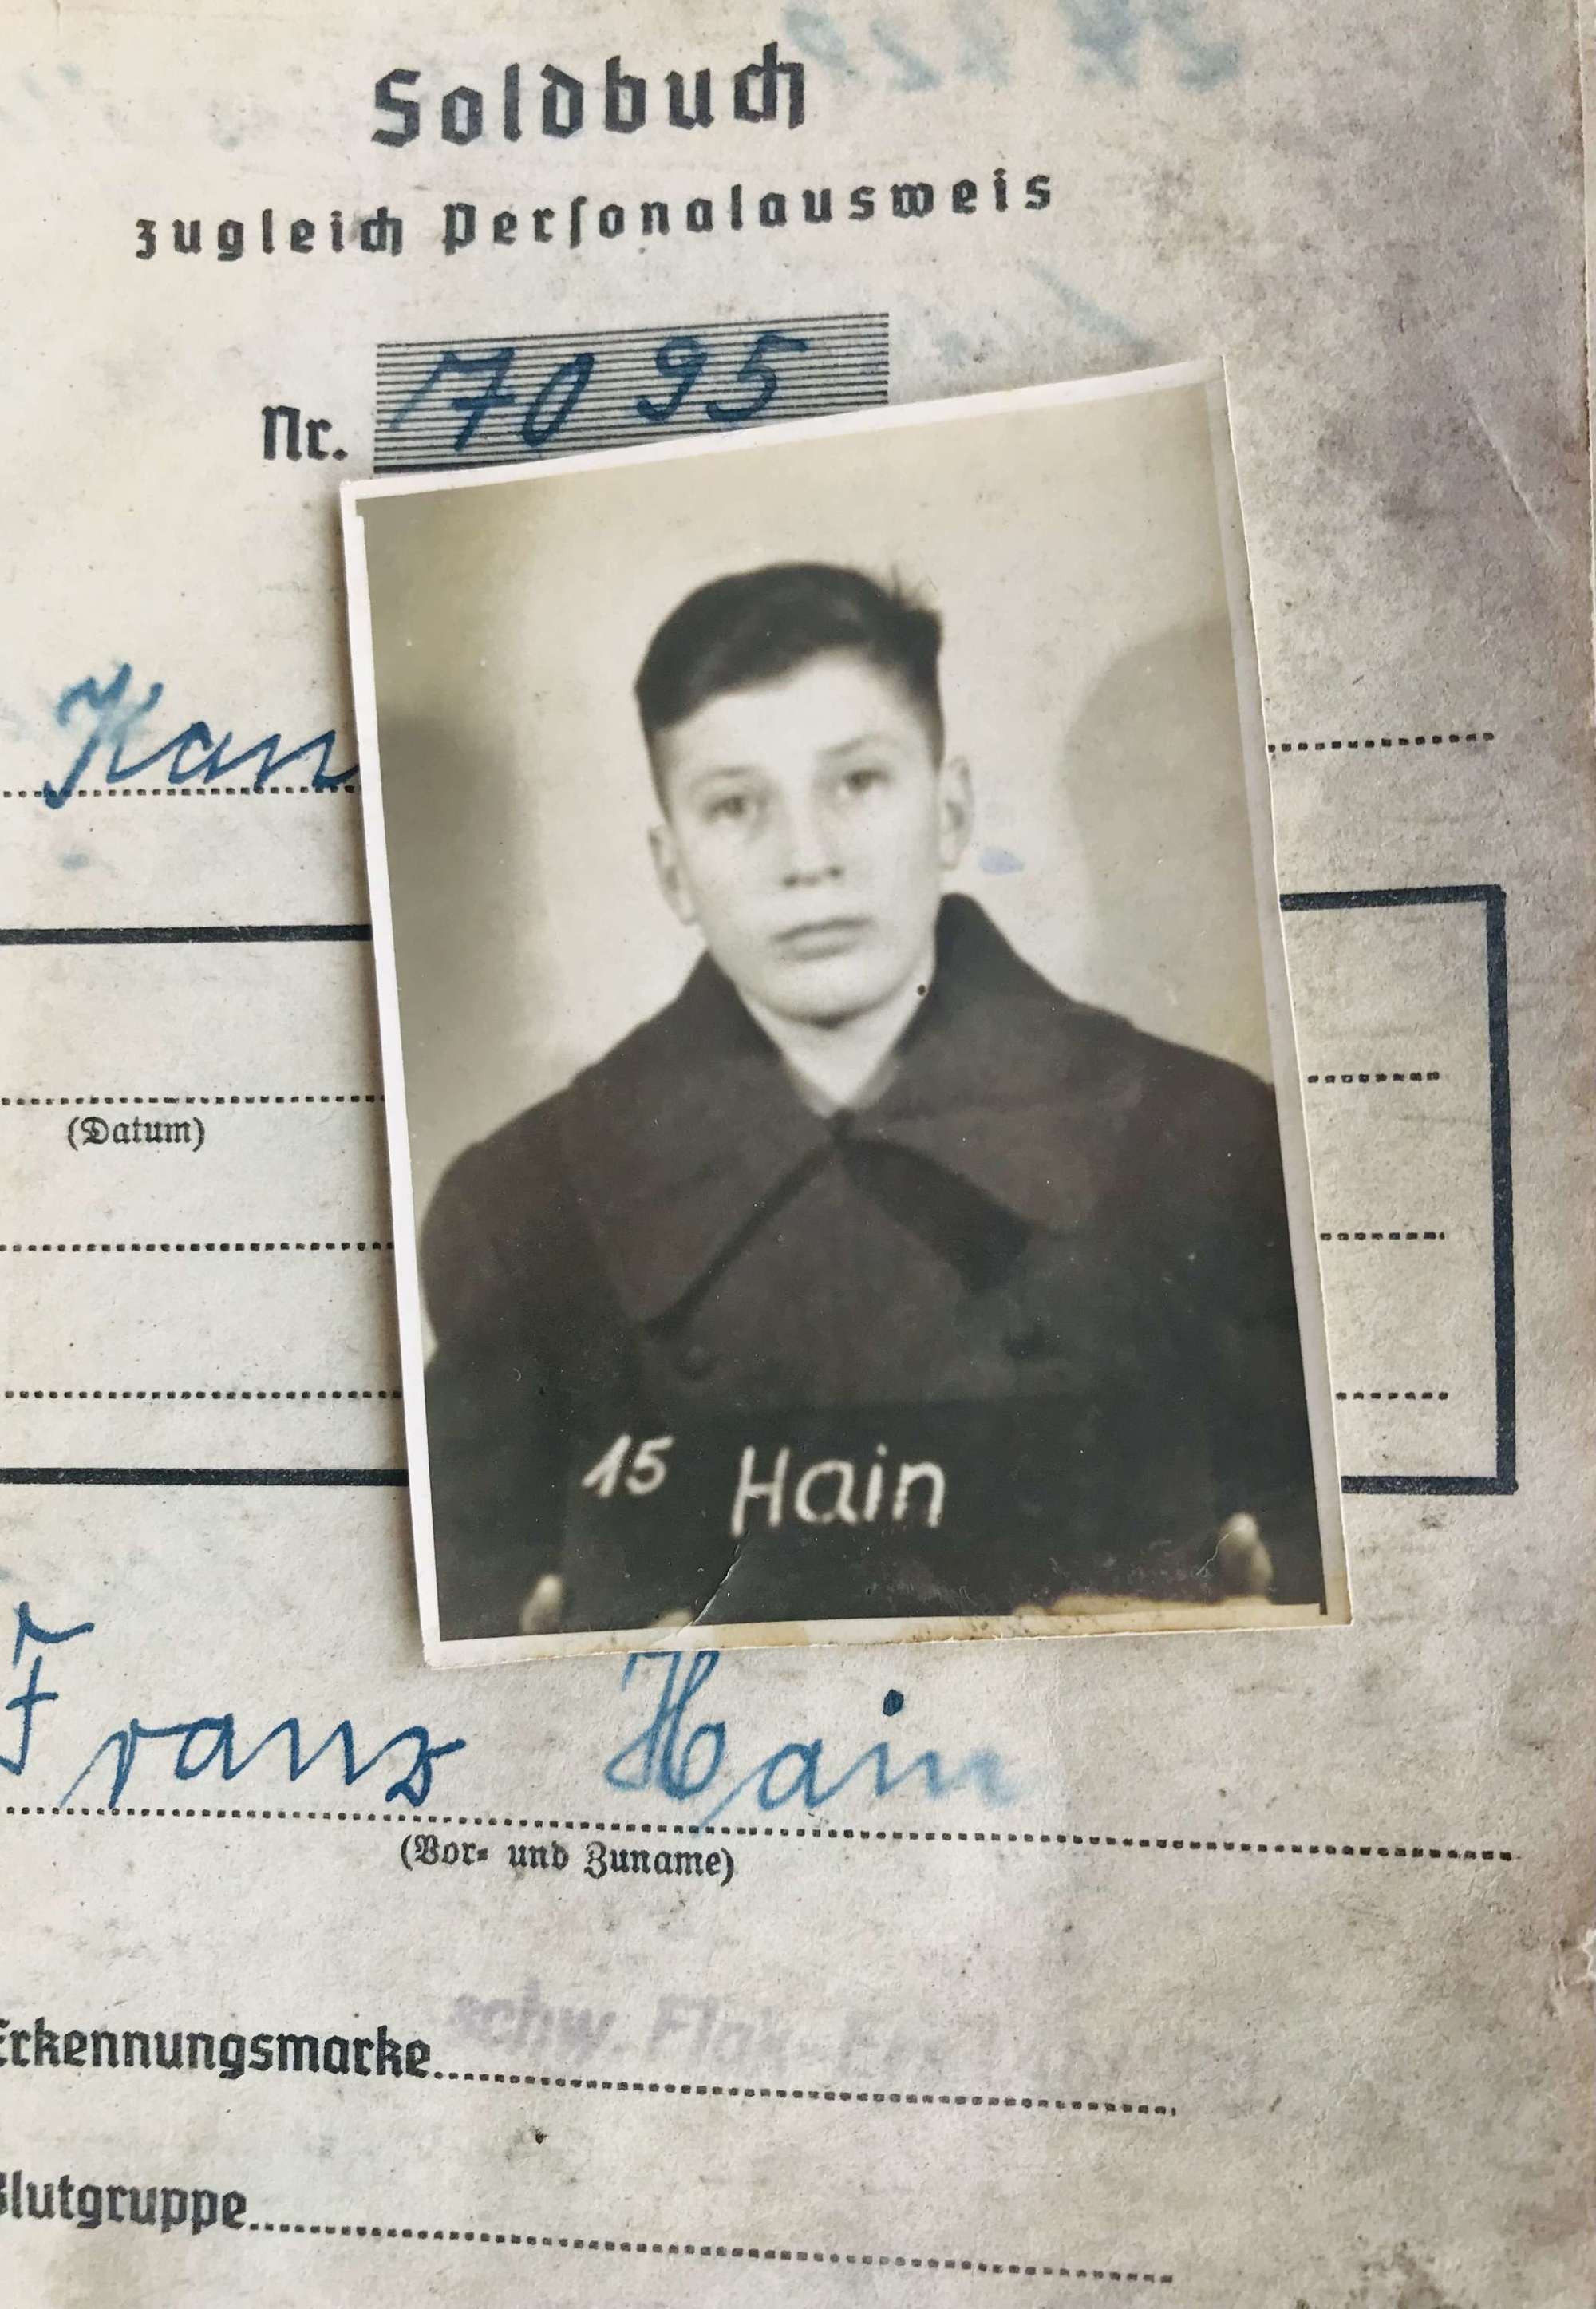 Luftwaffe Soldbuch of Kanonier Fritz Hain aged 17